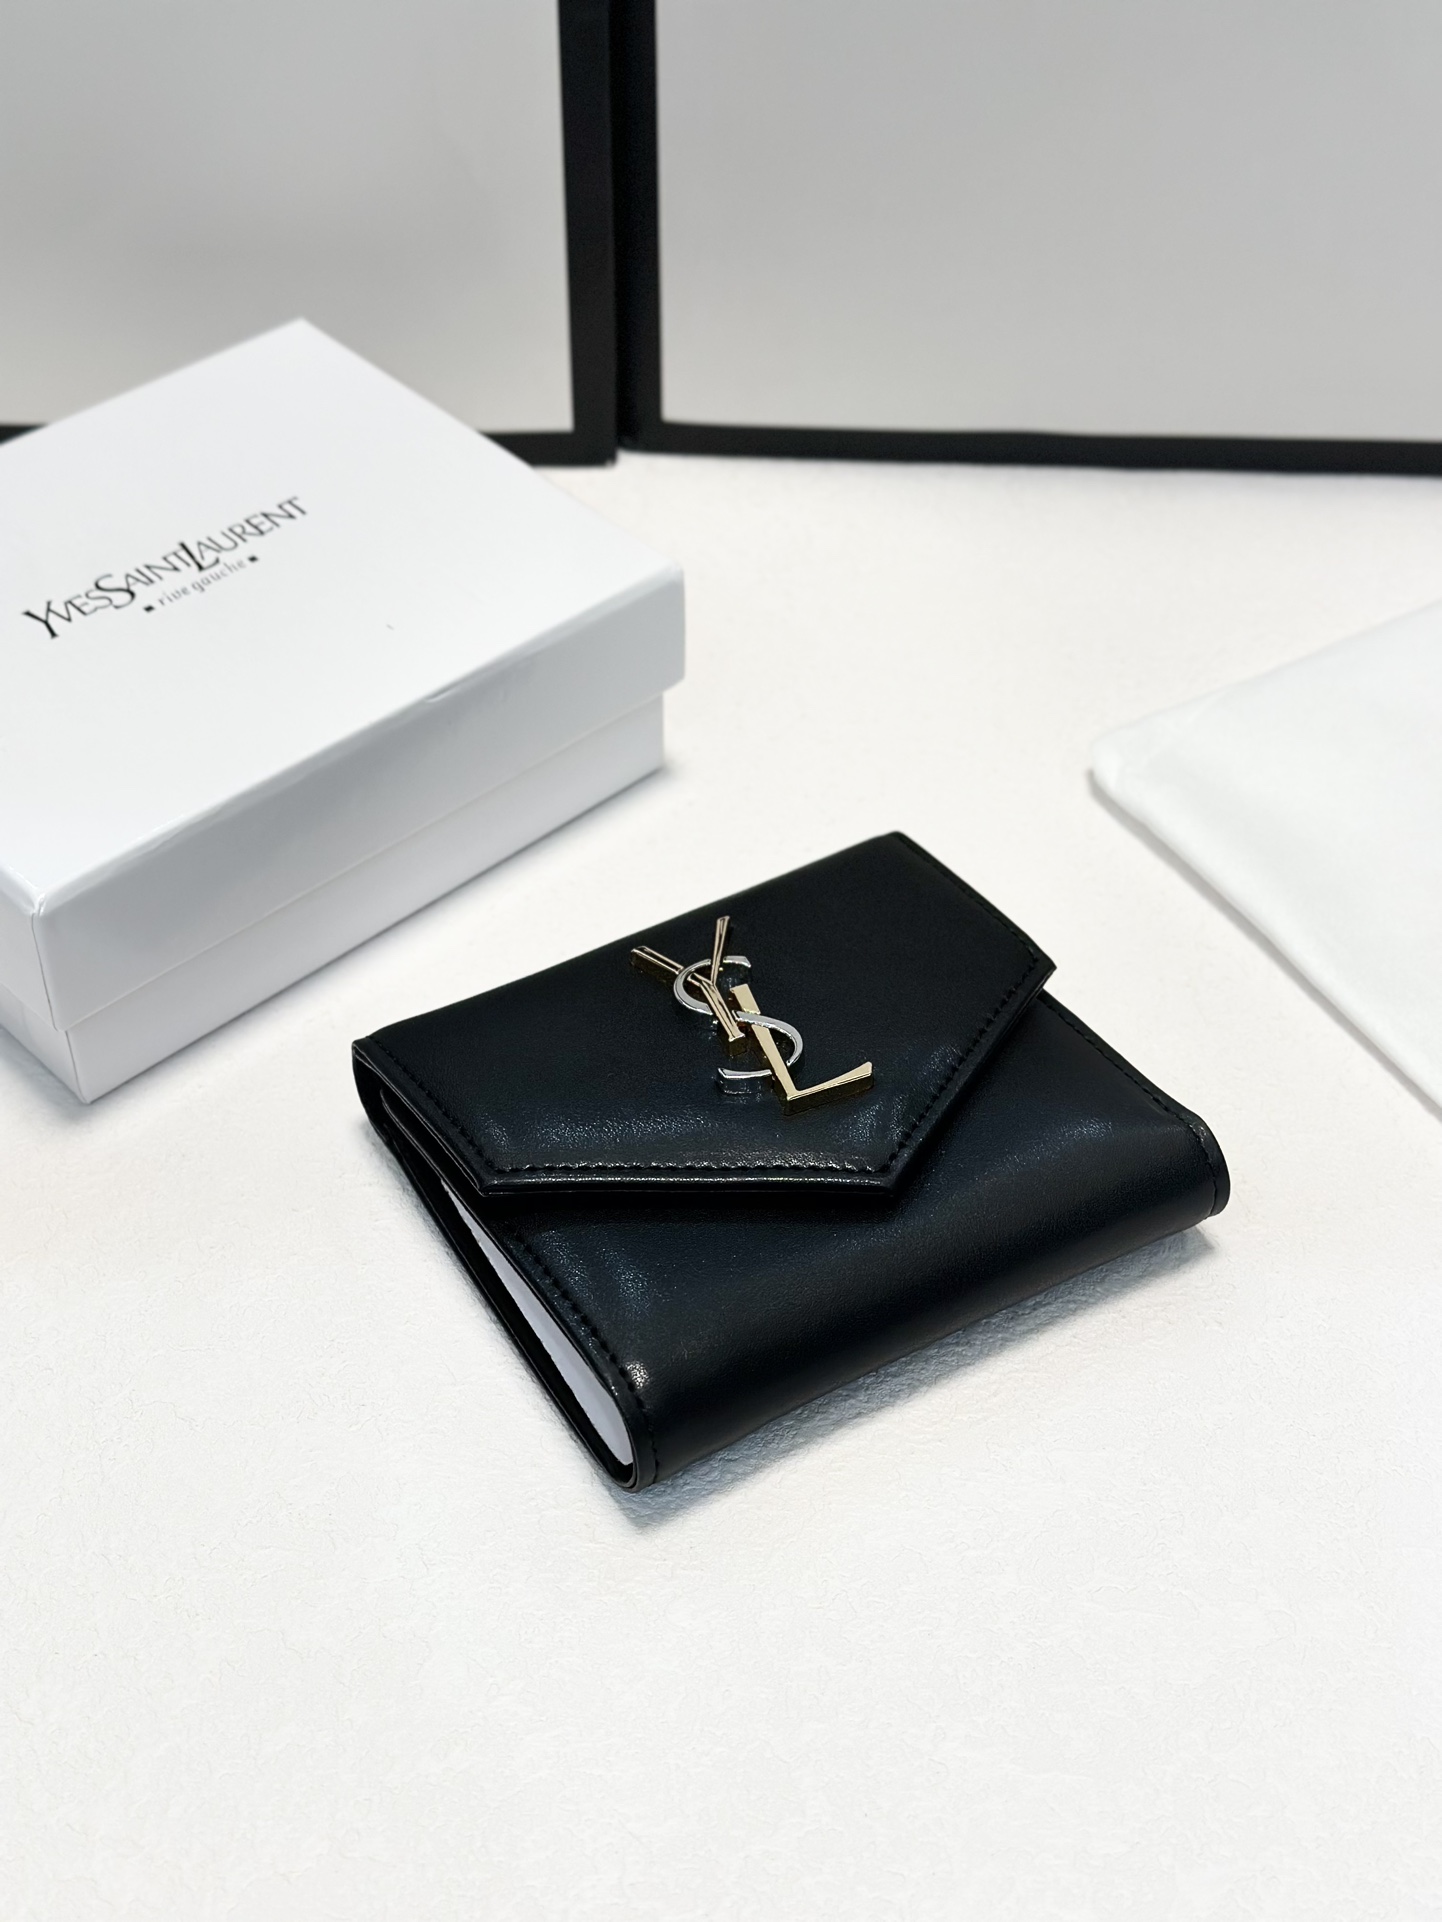 Yves Saint Laurent Geldbörse Schwarz Kalbsleder Rindsleder Fashion